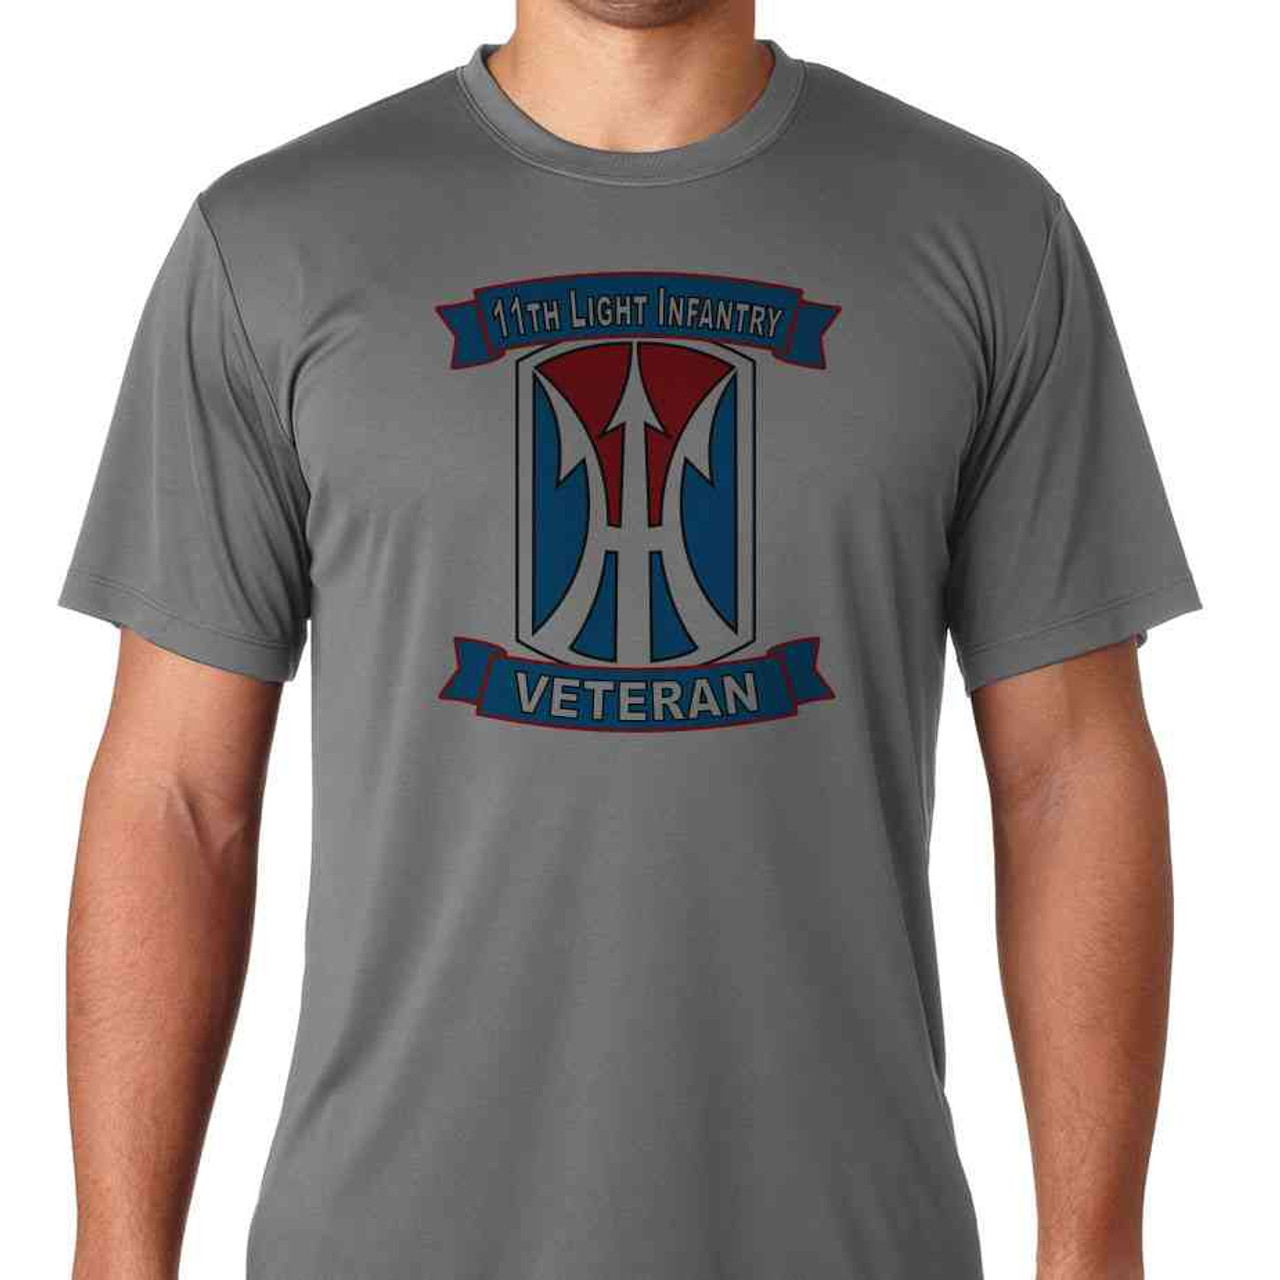 11th light infantry brigade veteran ss tshirt